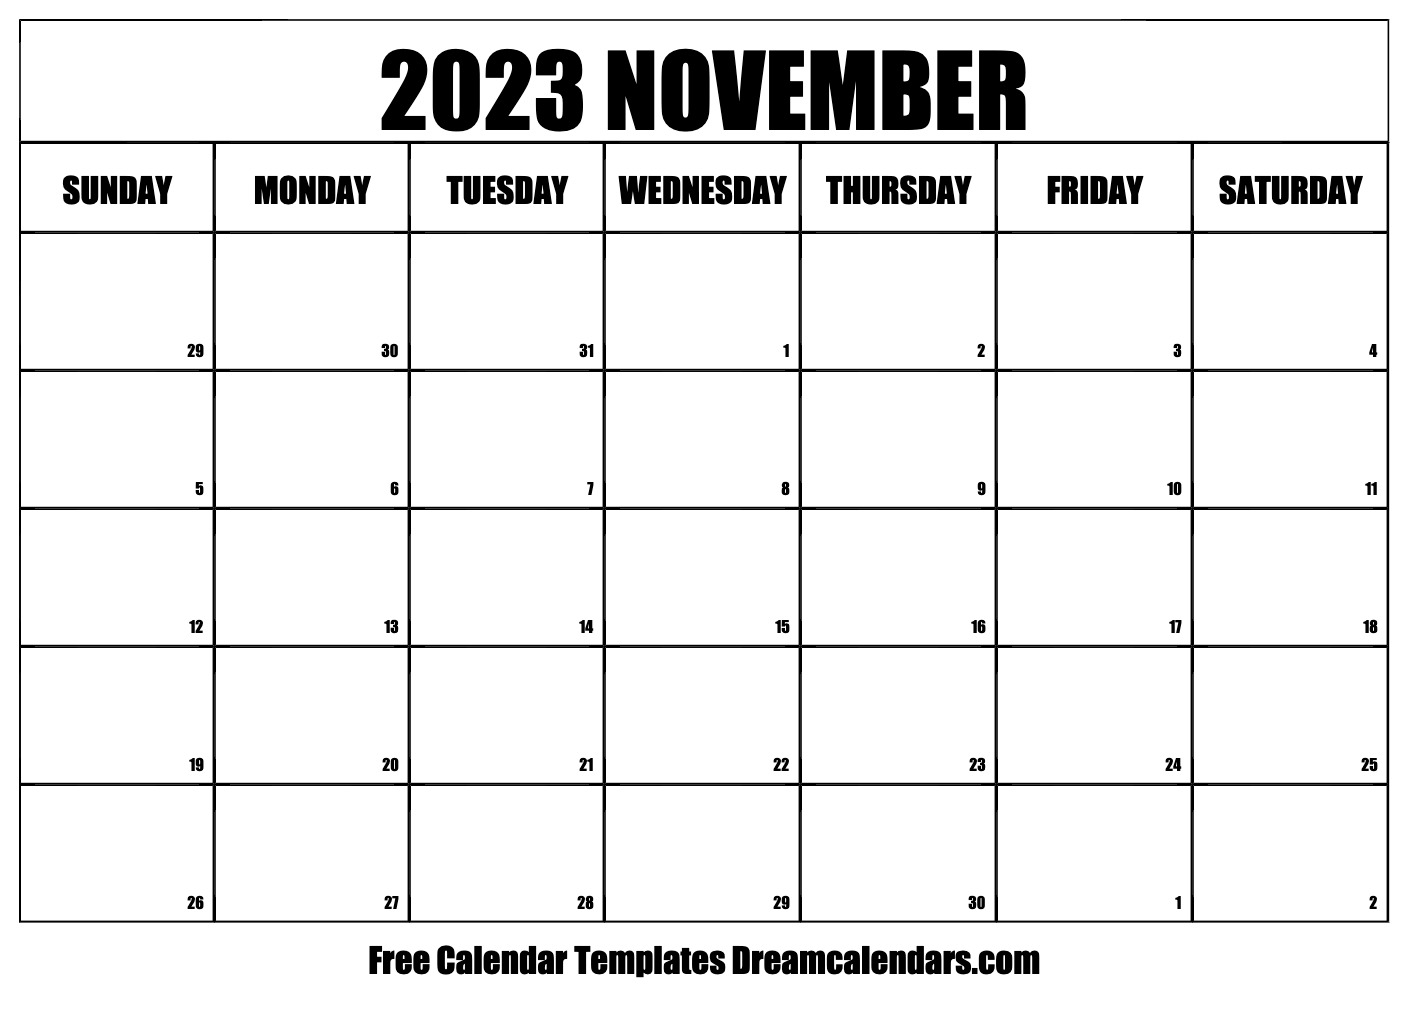 calendar-2023-november-printable-get-calendar-2023-update